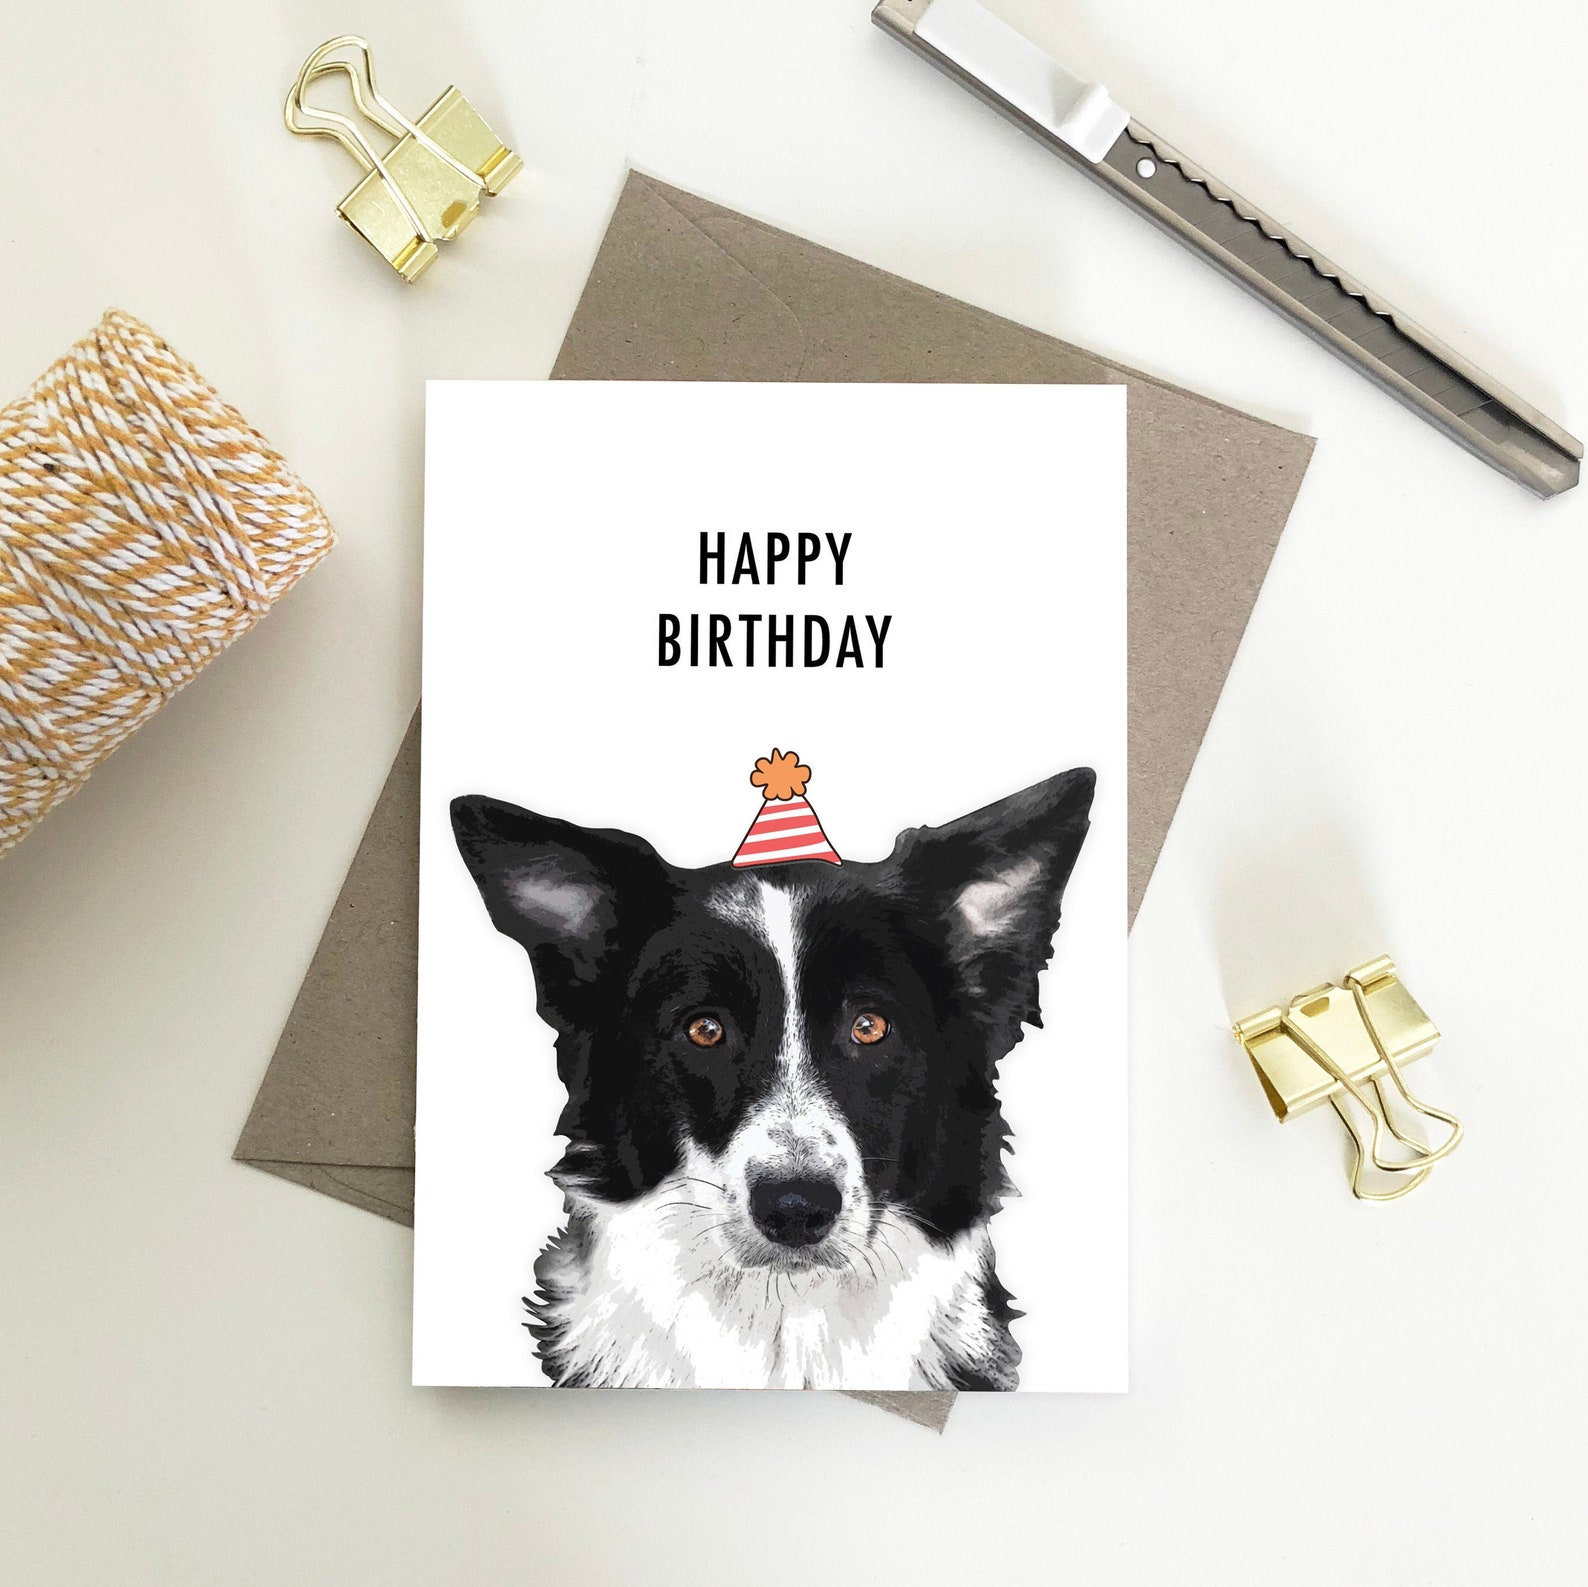 17 Amazing Dog Birthday Cards from Australian Designers